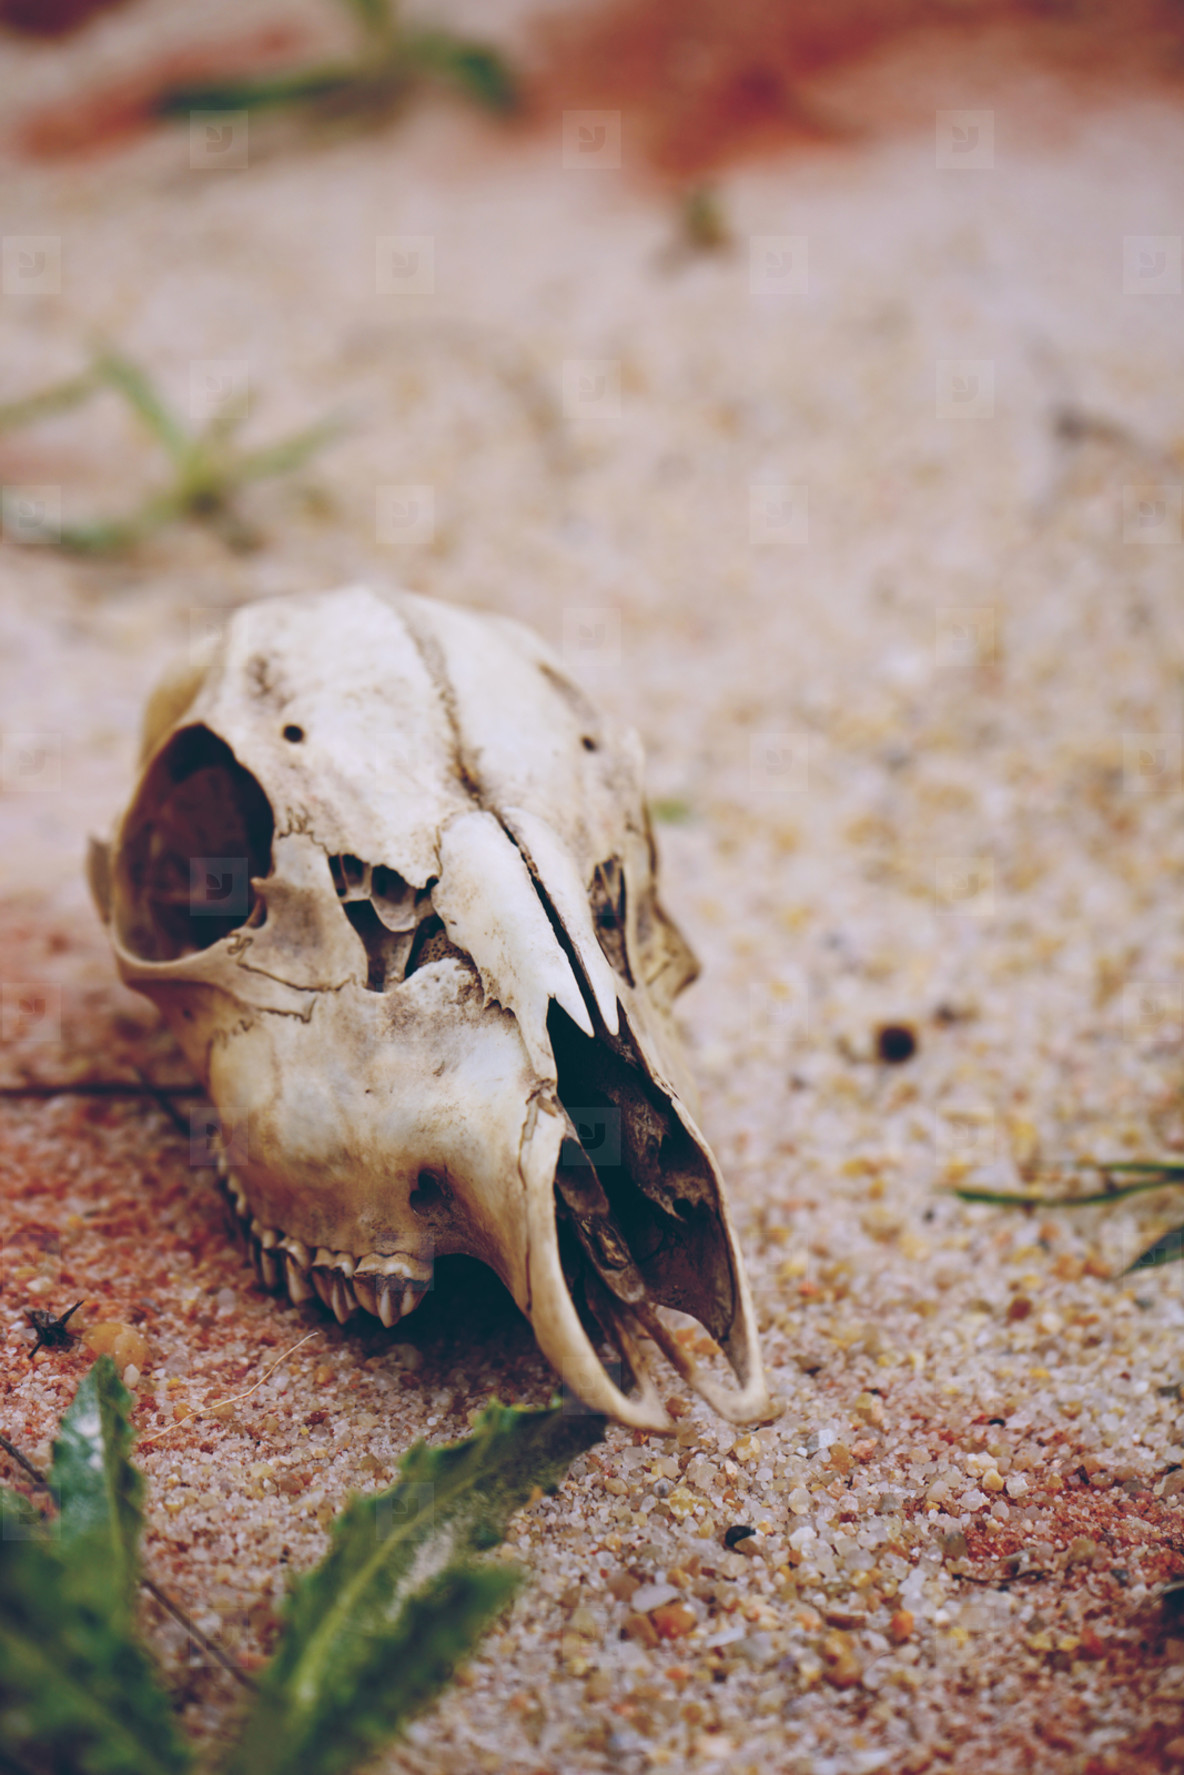 Animal skull in desert stock photo (151875) - YouWorkForThem